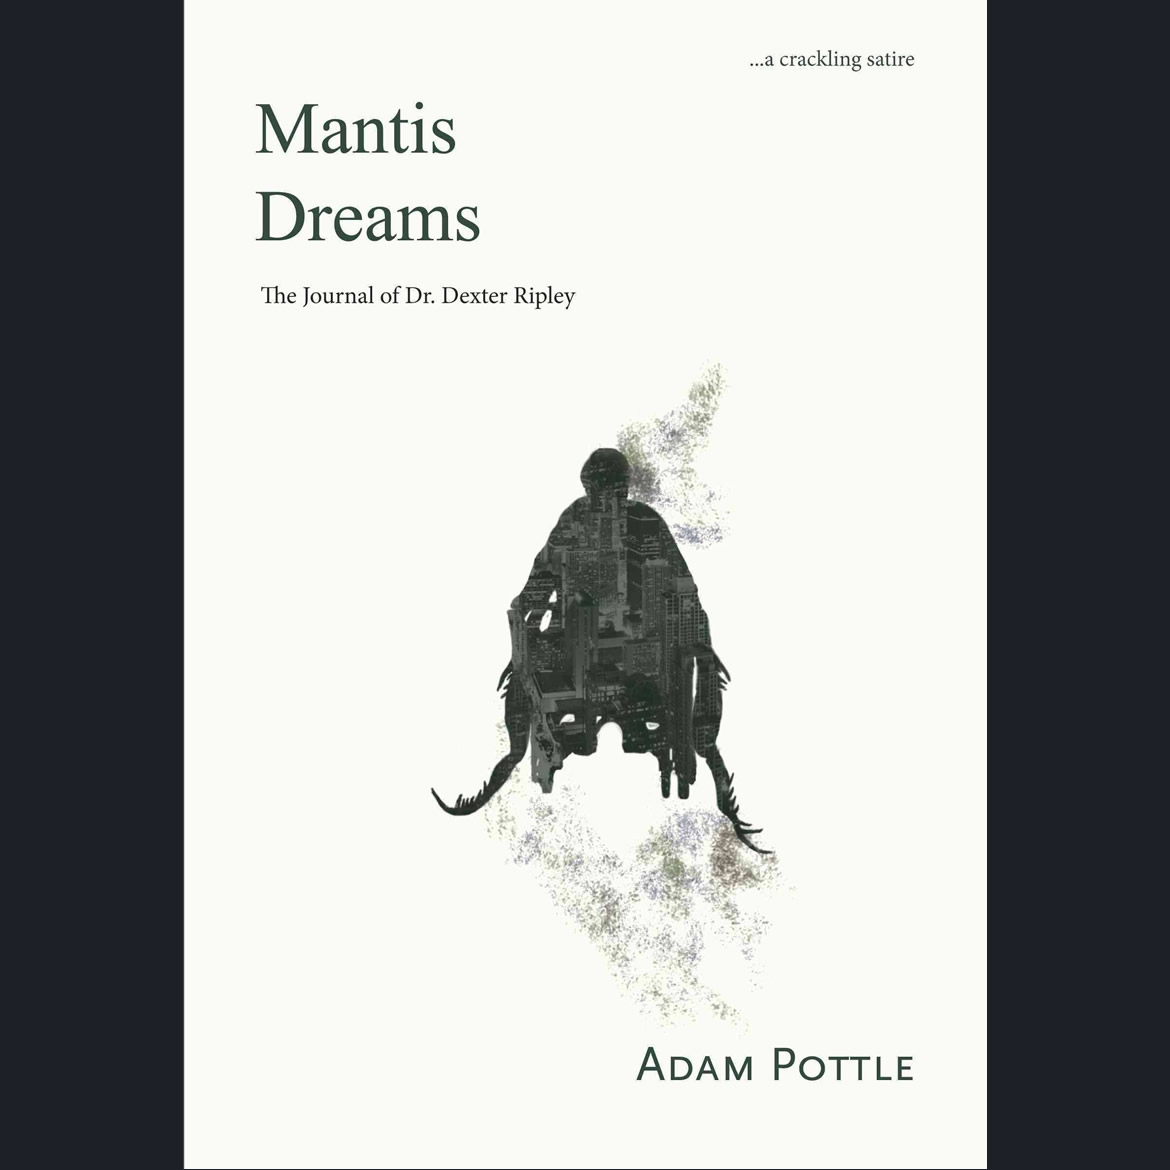 Mantis Dreams by Adam Pottle